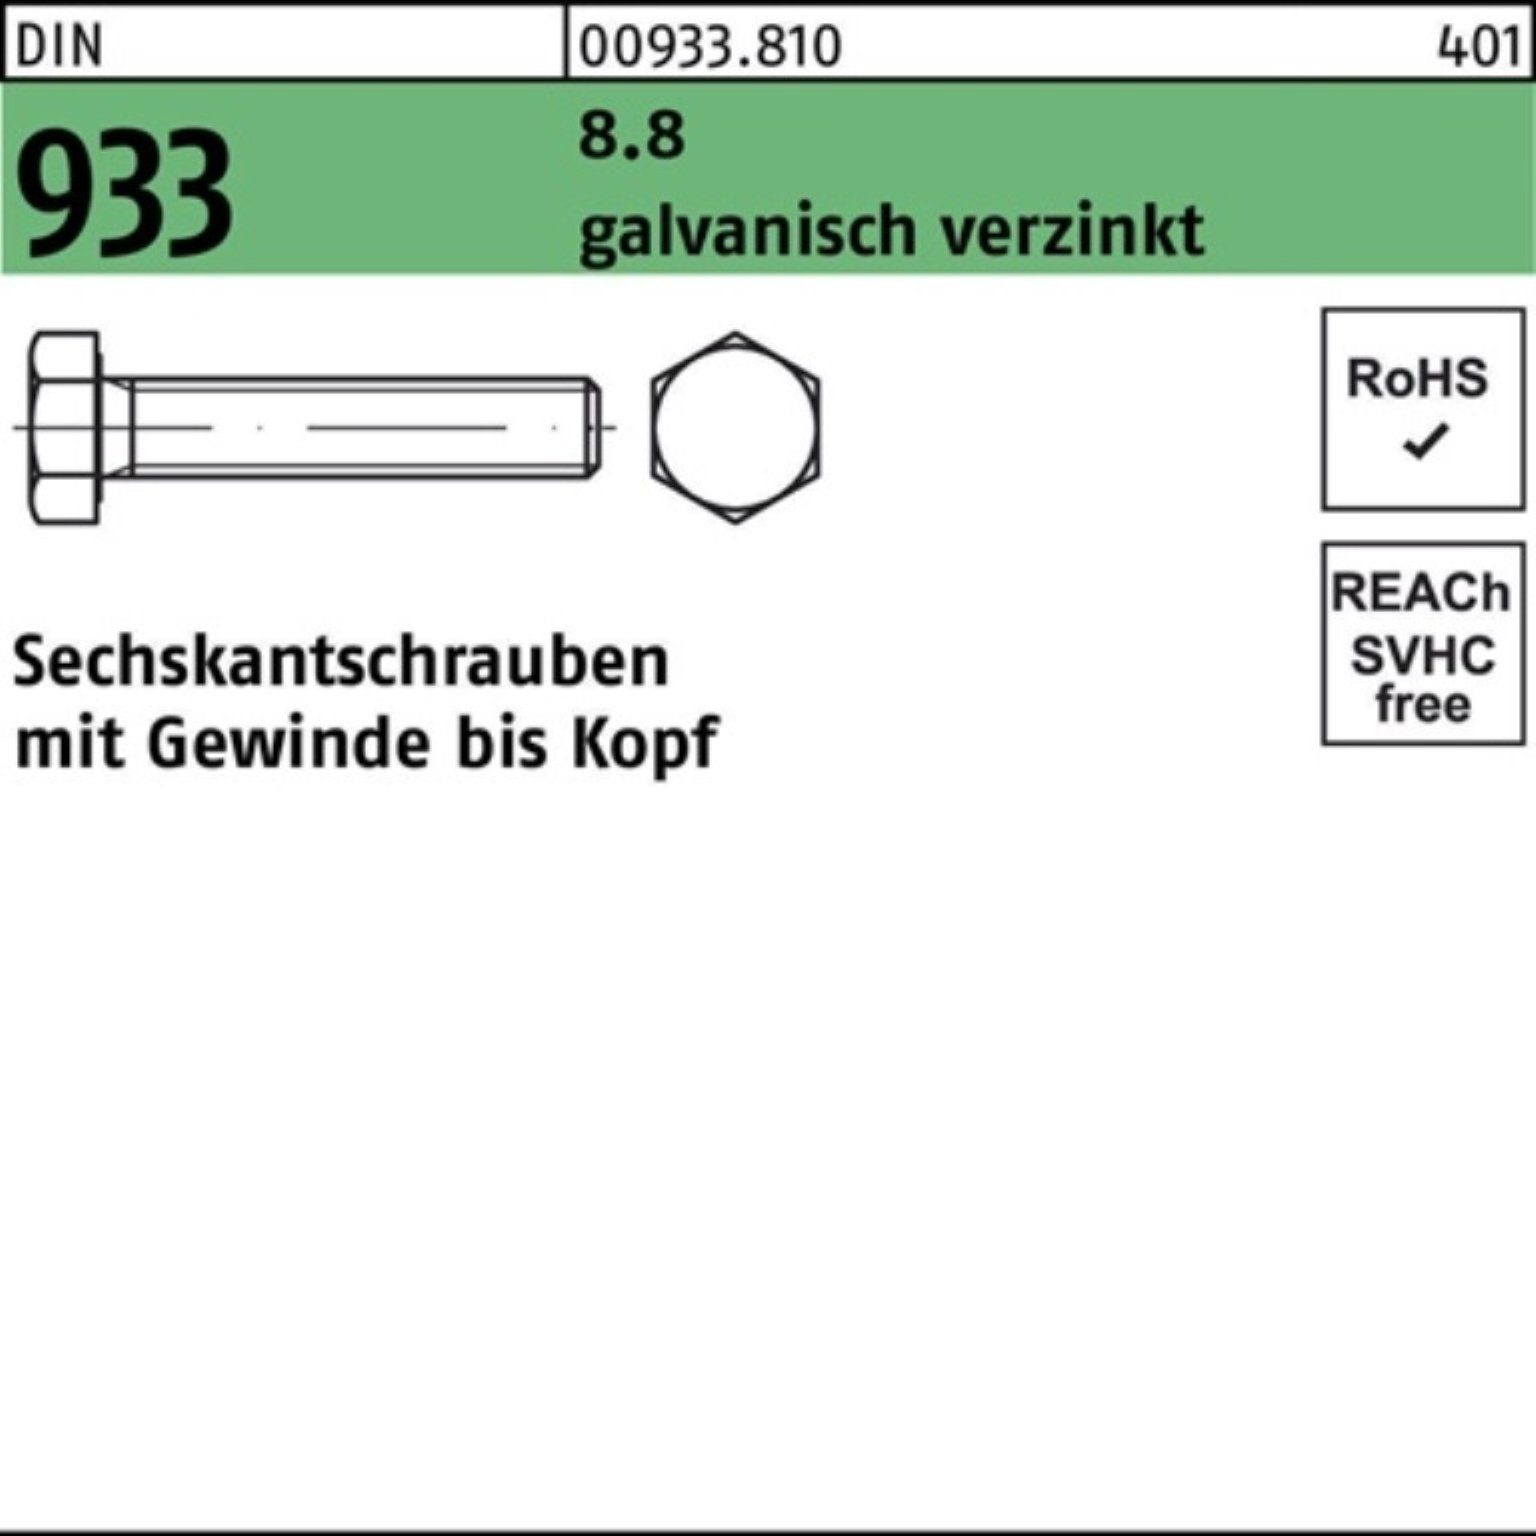 Sechskantschraube 45 10 933 M27x Reyher Sechskantschraube DIN galv.verz. 100er Pack 8.8 Stü VG